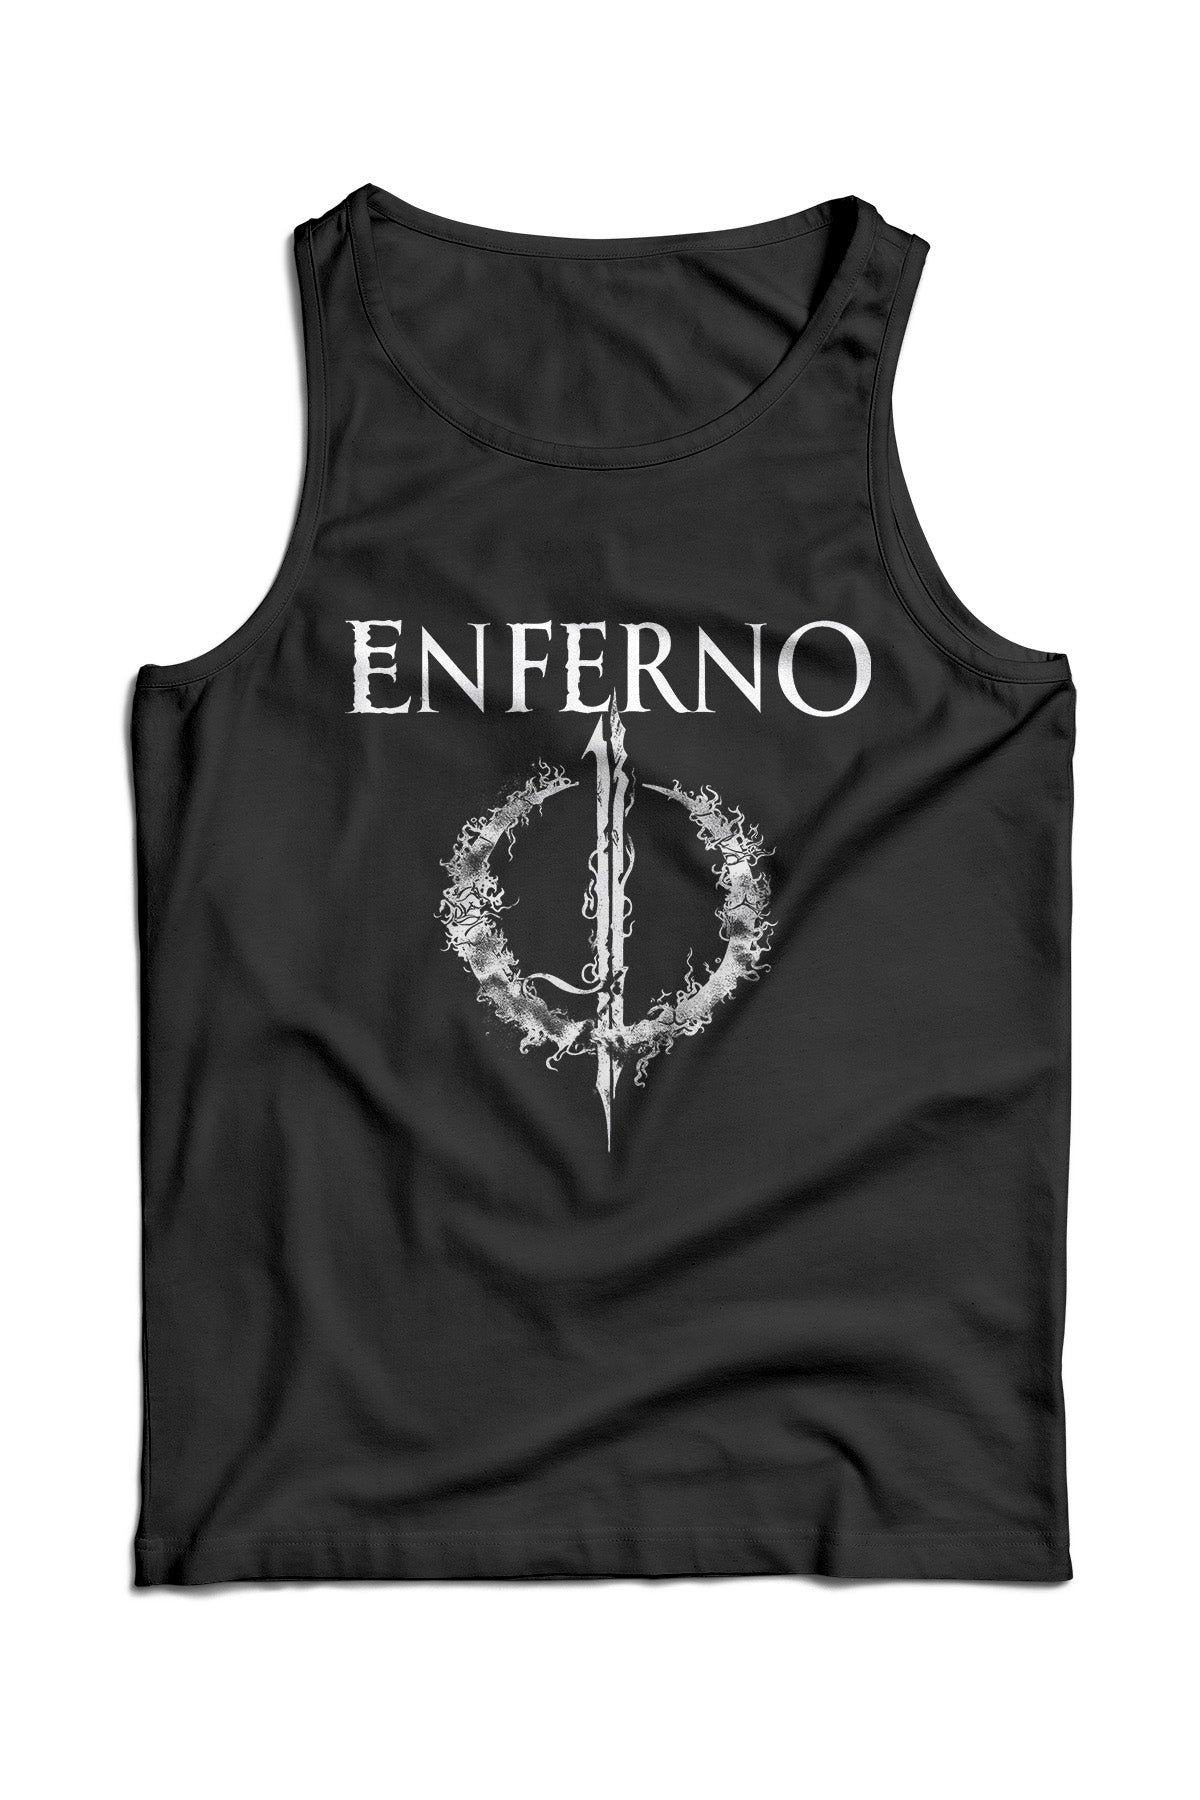 Enferno Classic Logo Tank in Black.